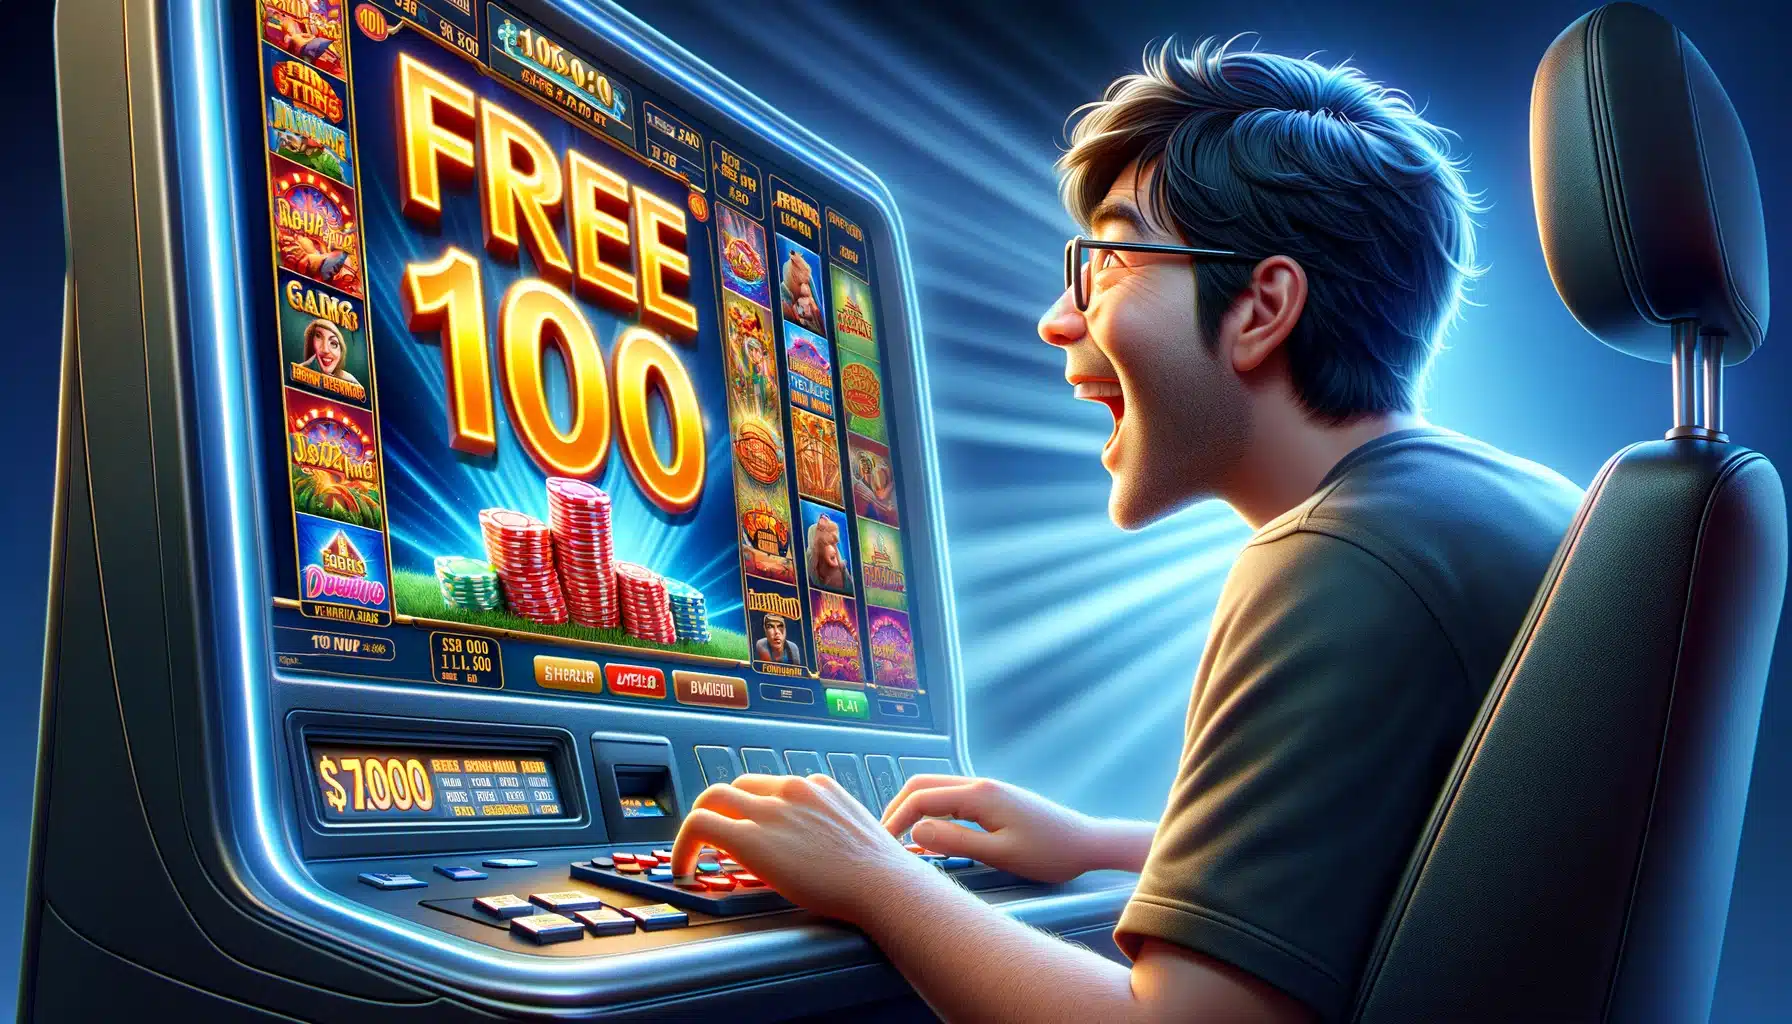 Why New Players Should Take Advantage of JILI Slot's Free 100 Offer